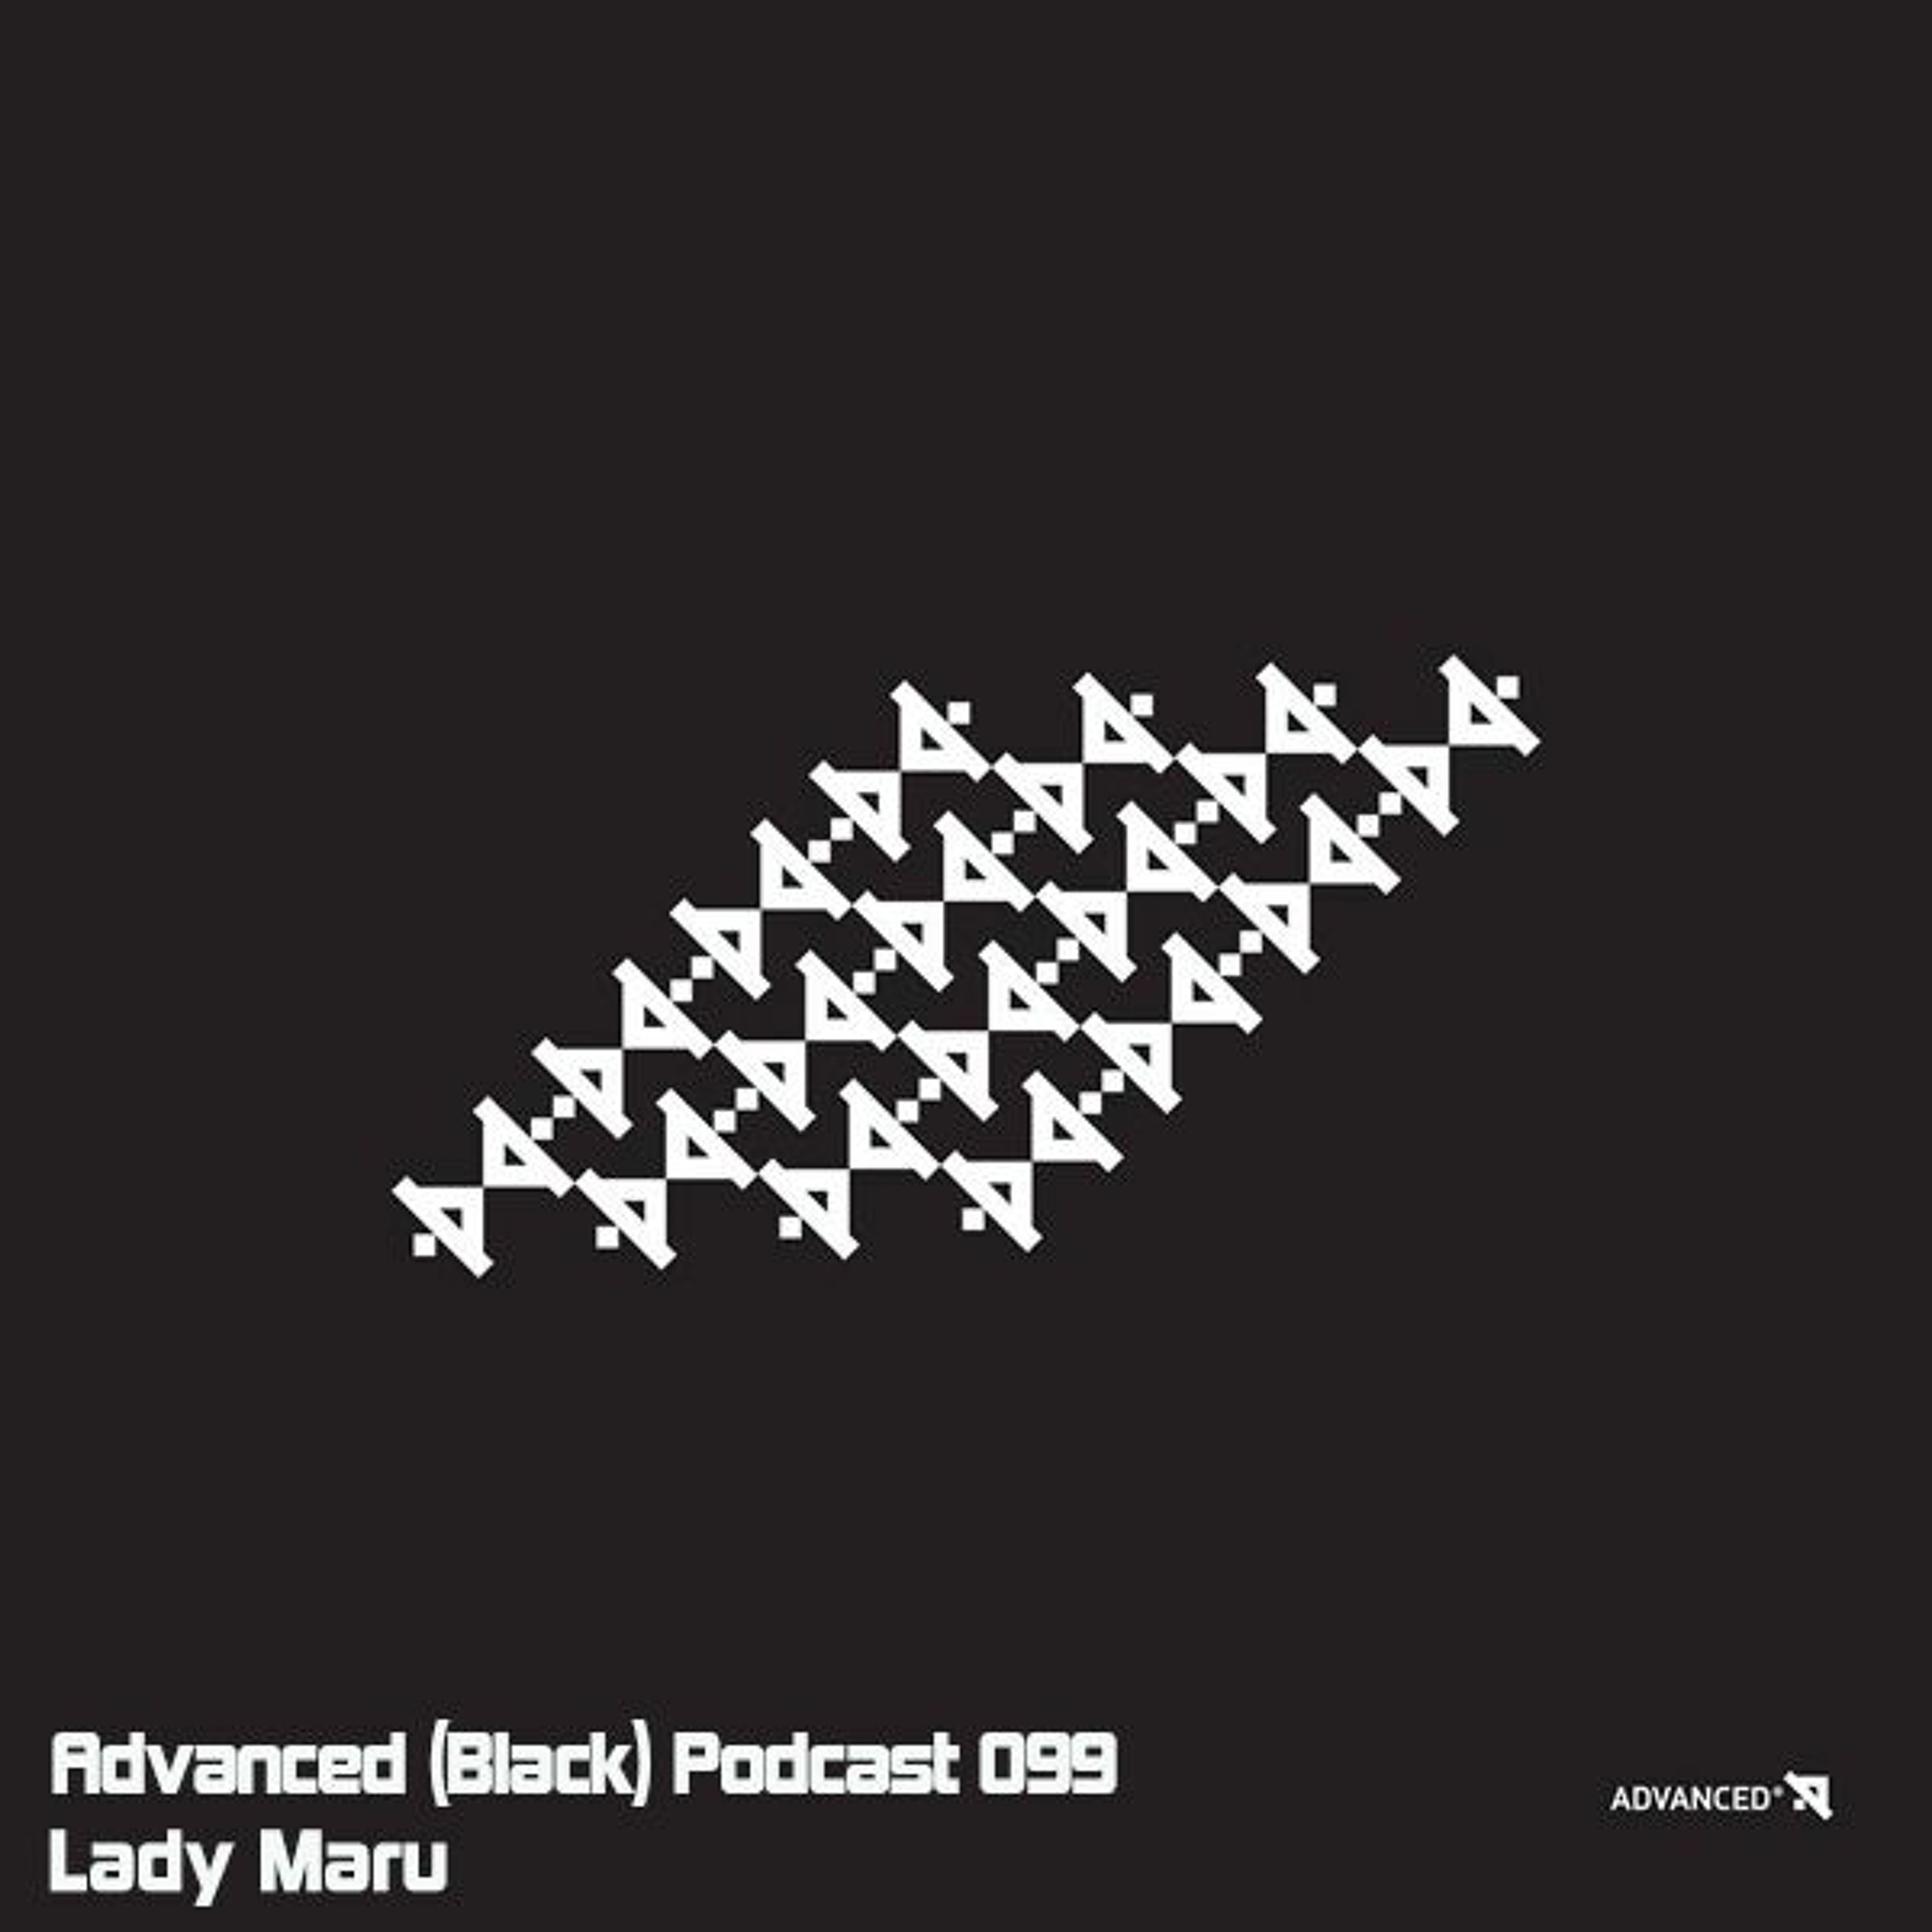 Advanced (Black) Podcast 099 with Lady Maru